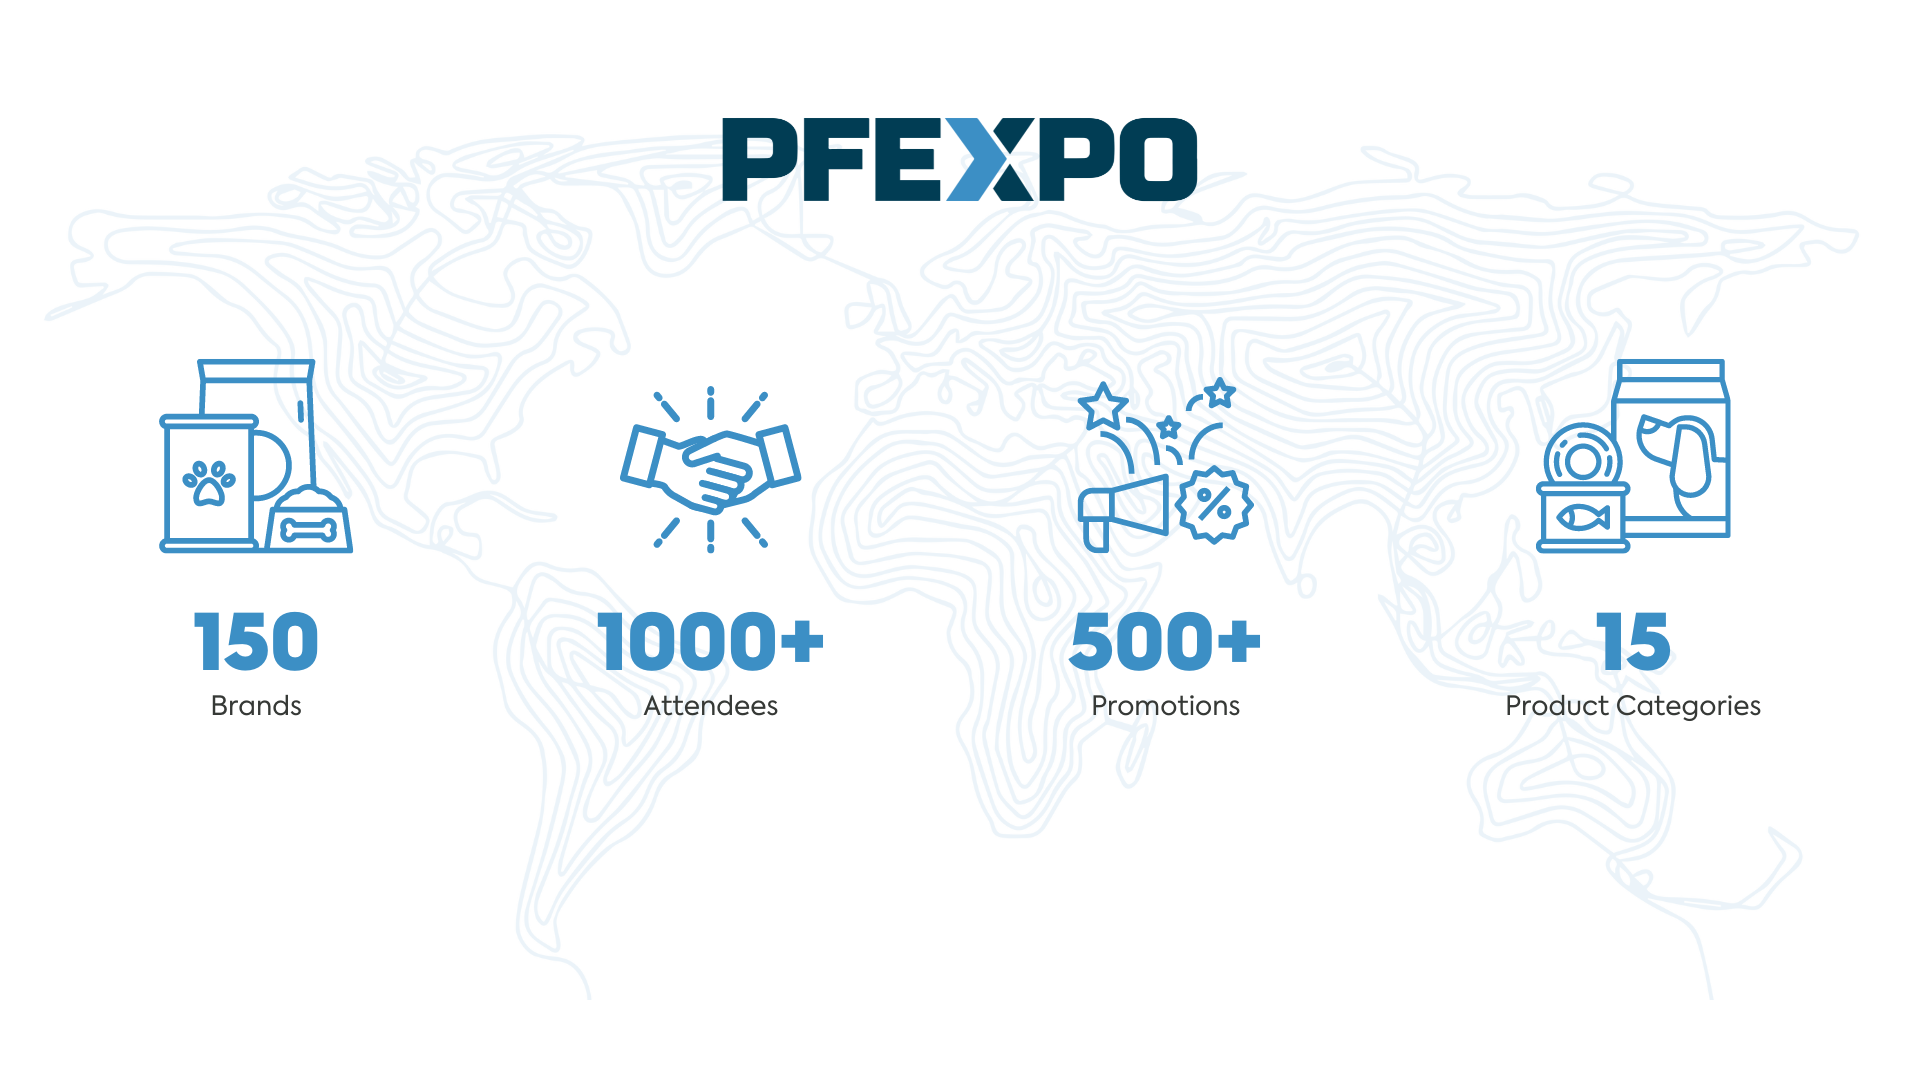 PFEXPO Stats